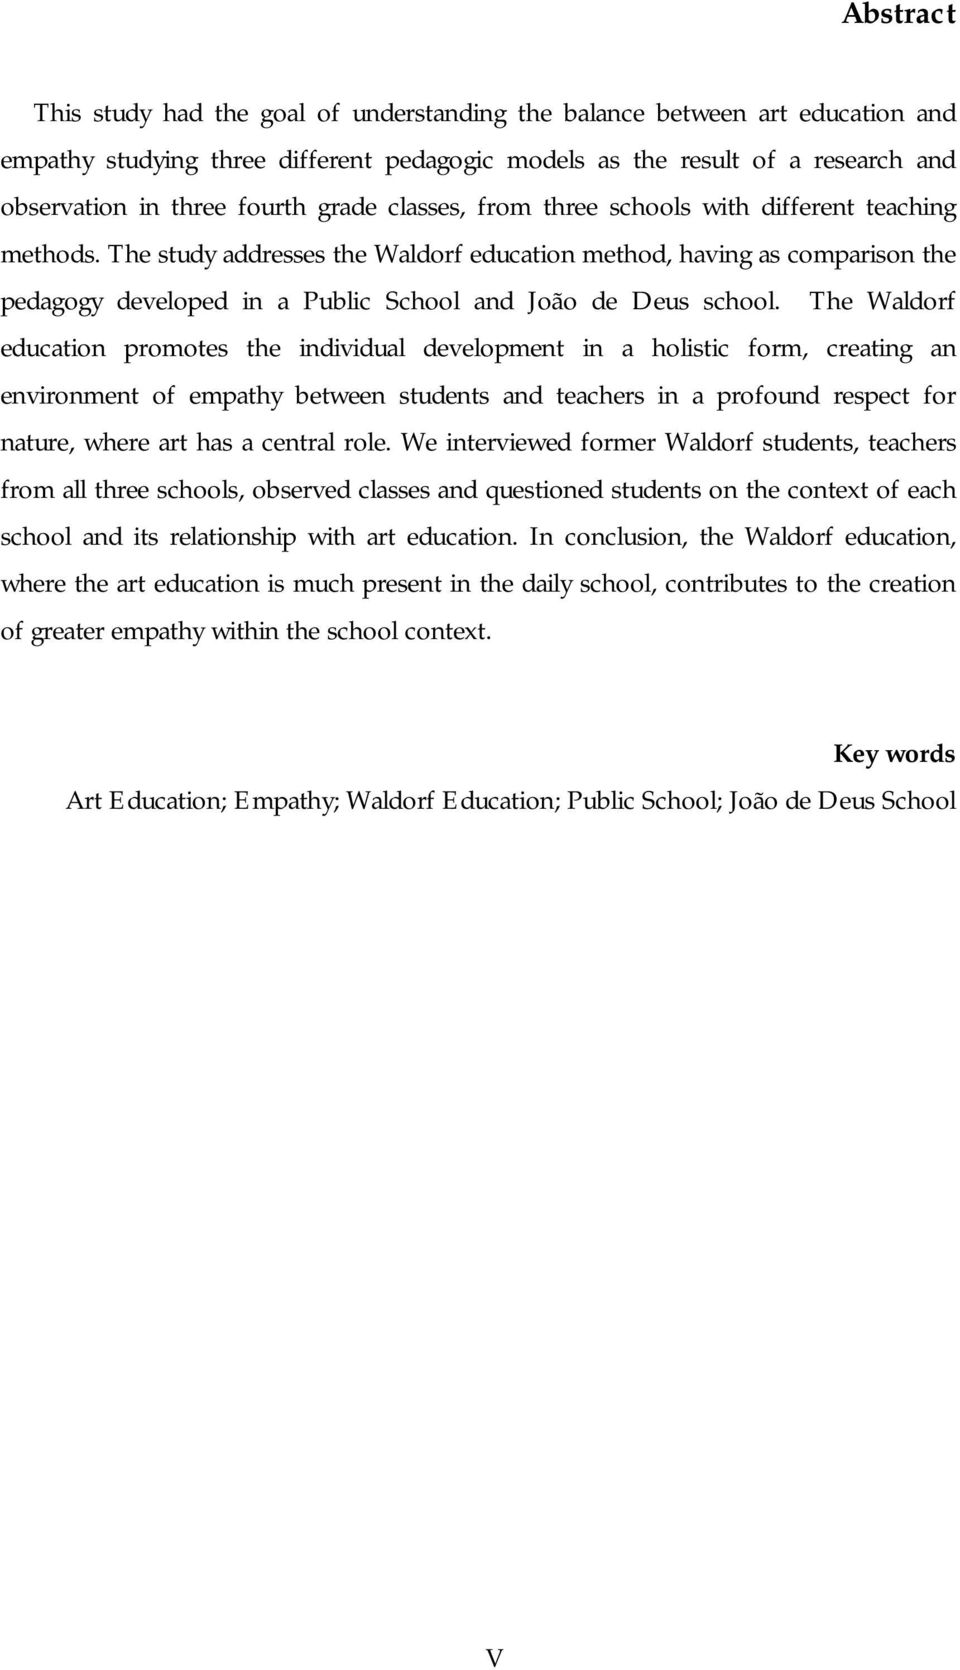 The study addresses the Waldorf education method, having as comparison the pedagogy developed in a Public School and João de Deus school.